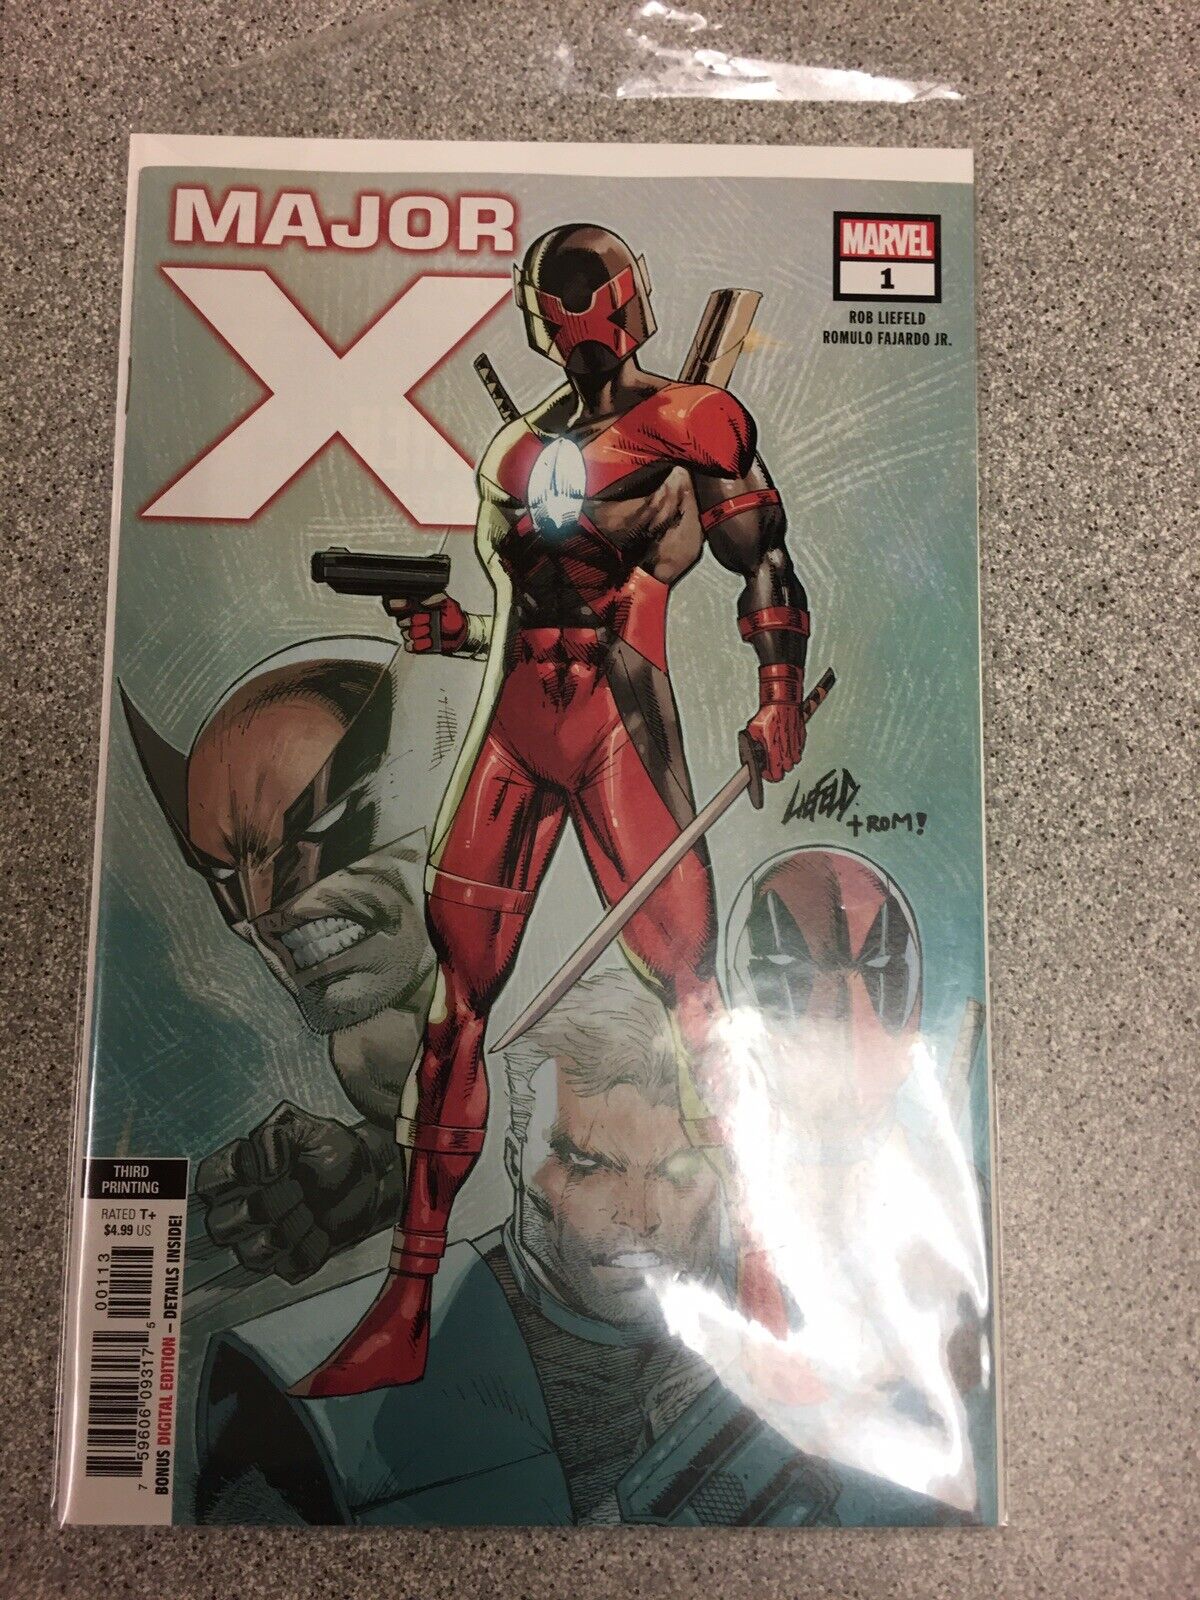 Marvel Major X #1